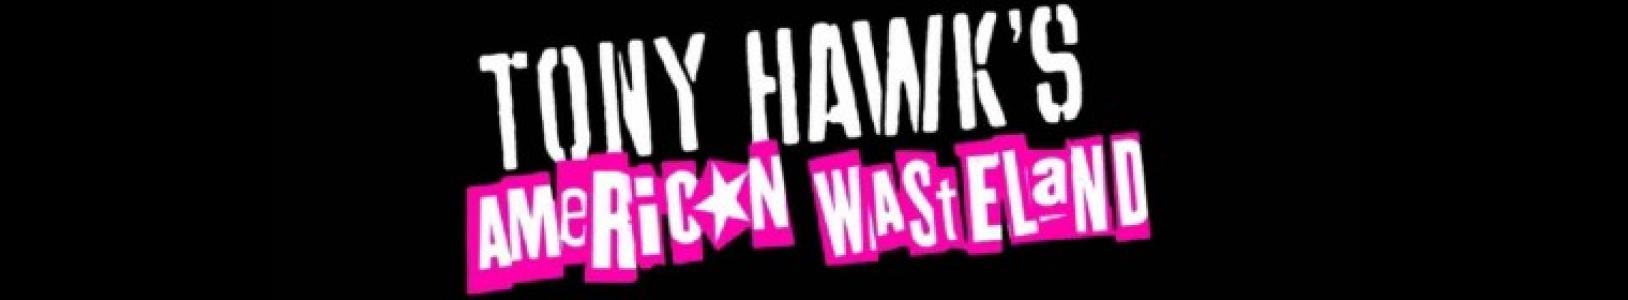 Tony Hawk's American Wasteland banner